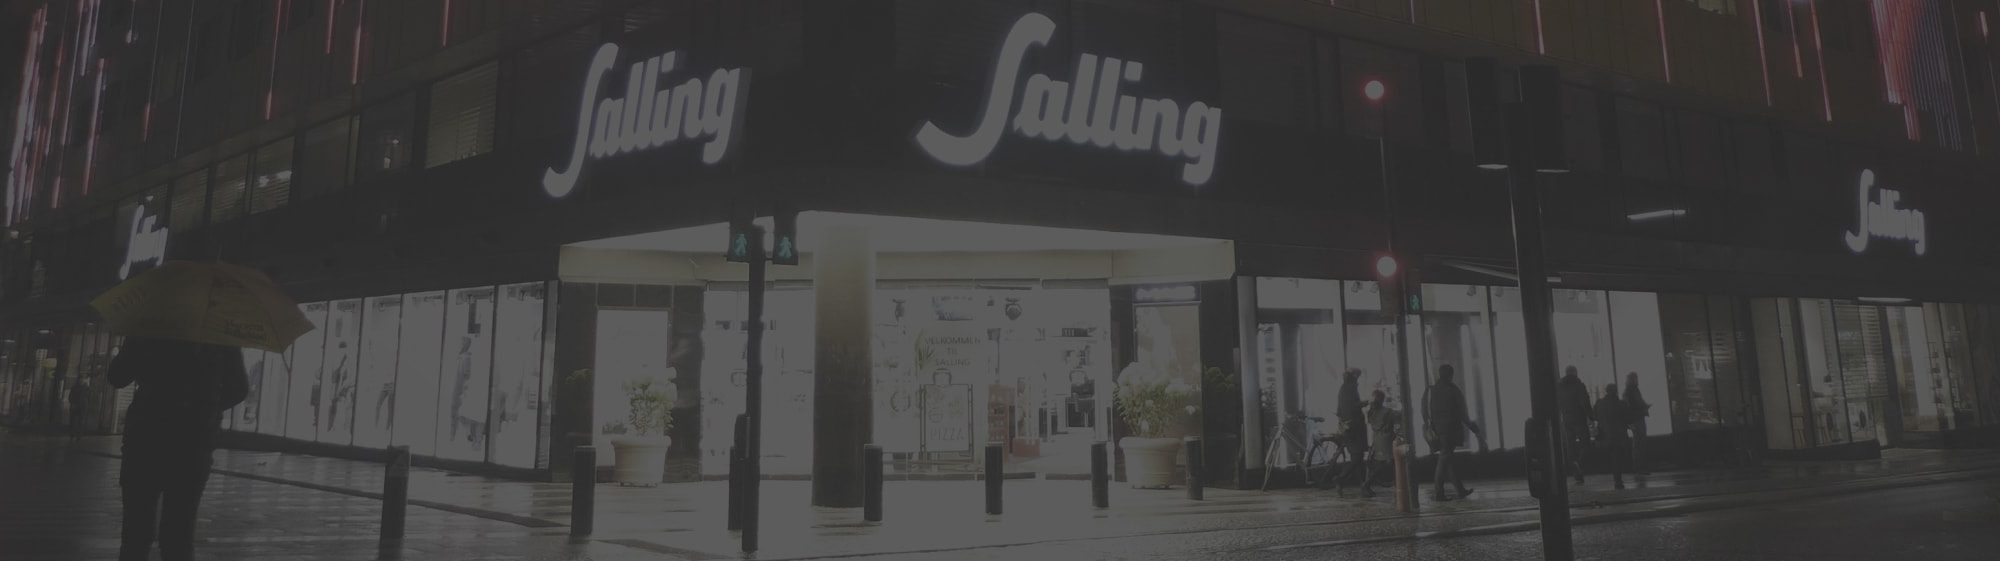 Salling-banner